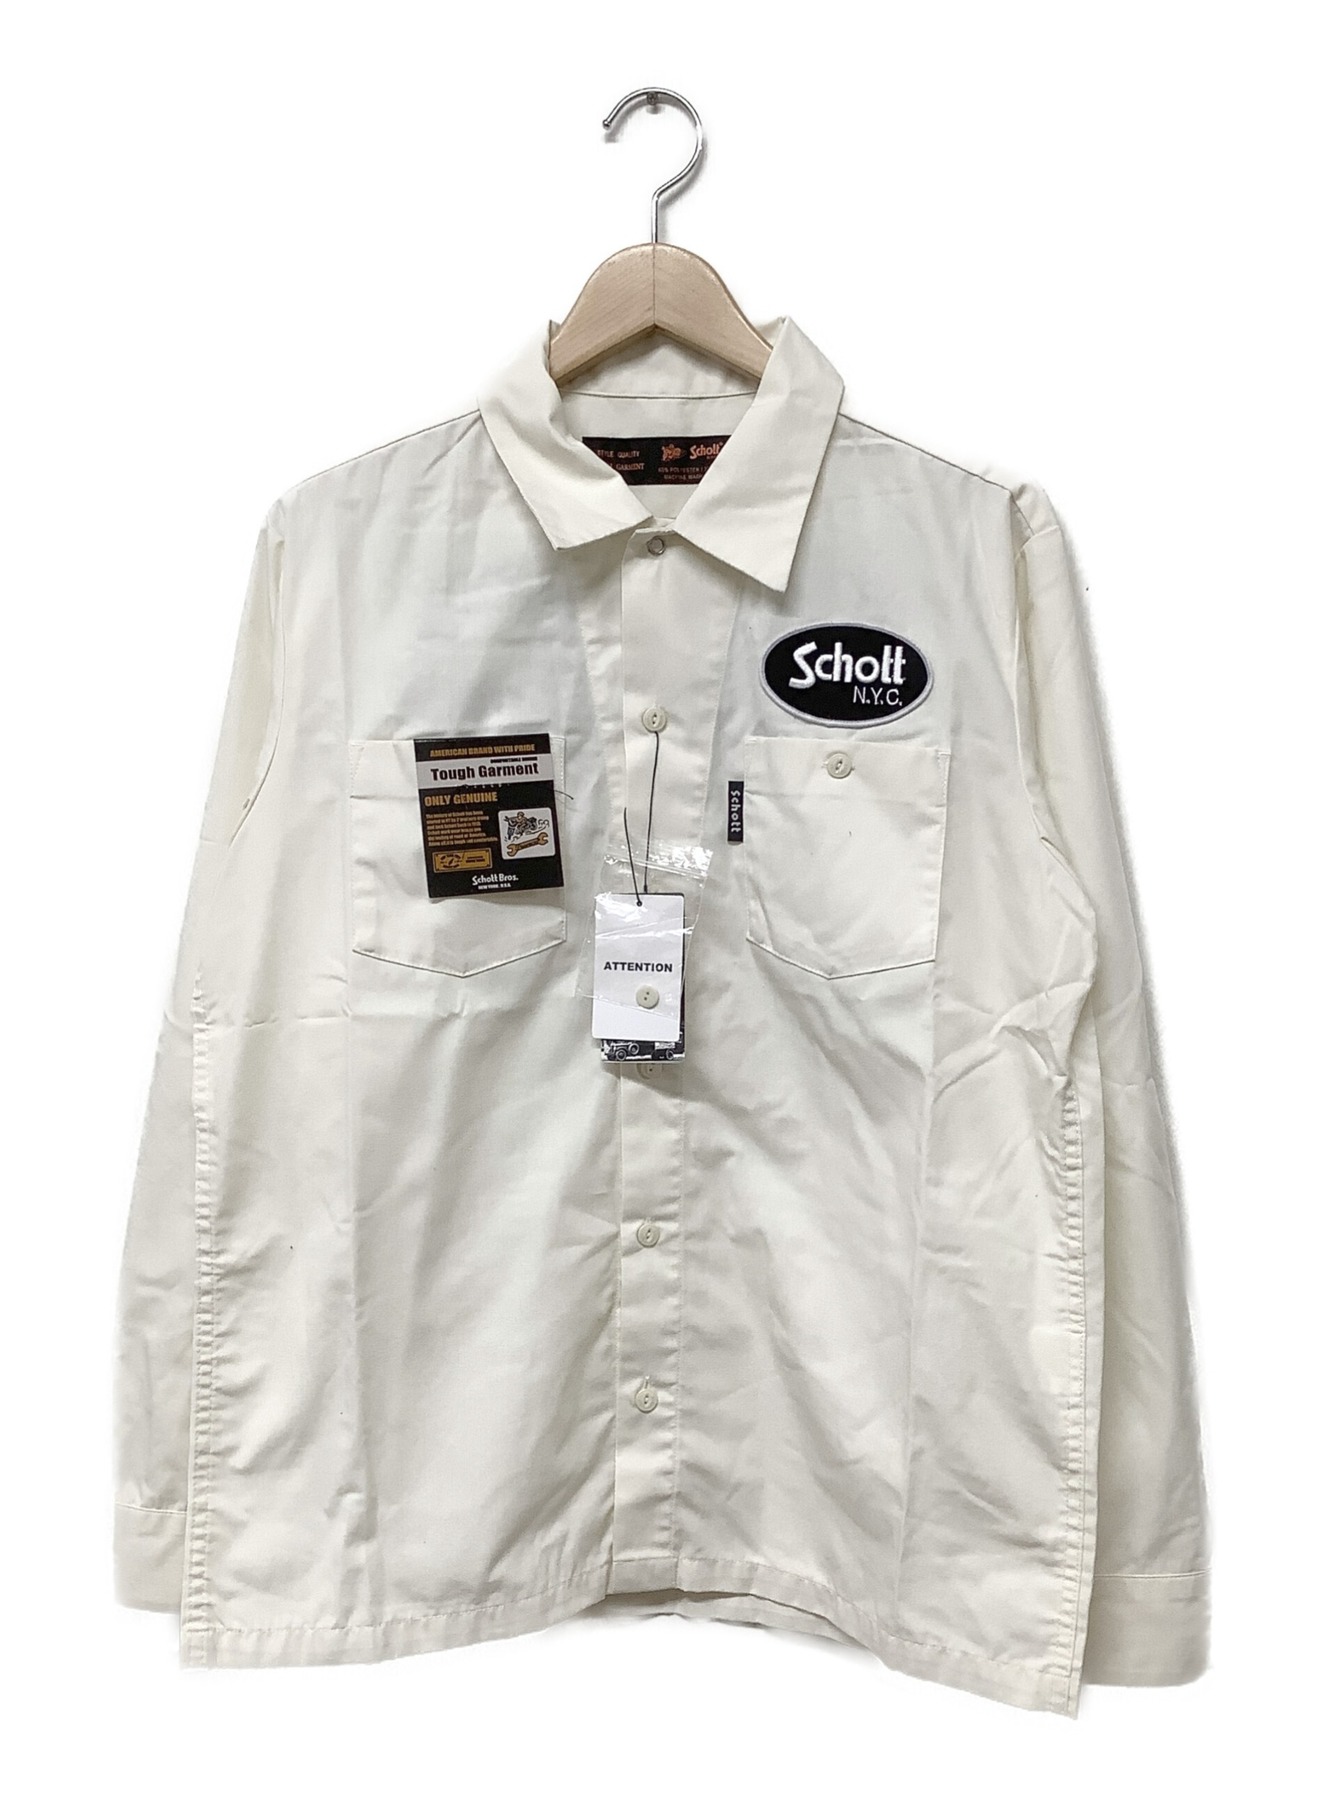 Schott (ショット) モーターサイクルロゴオープンカラーシャツ ホワイト サイズ:M 未使用品